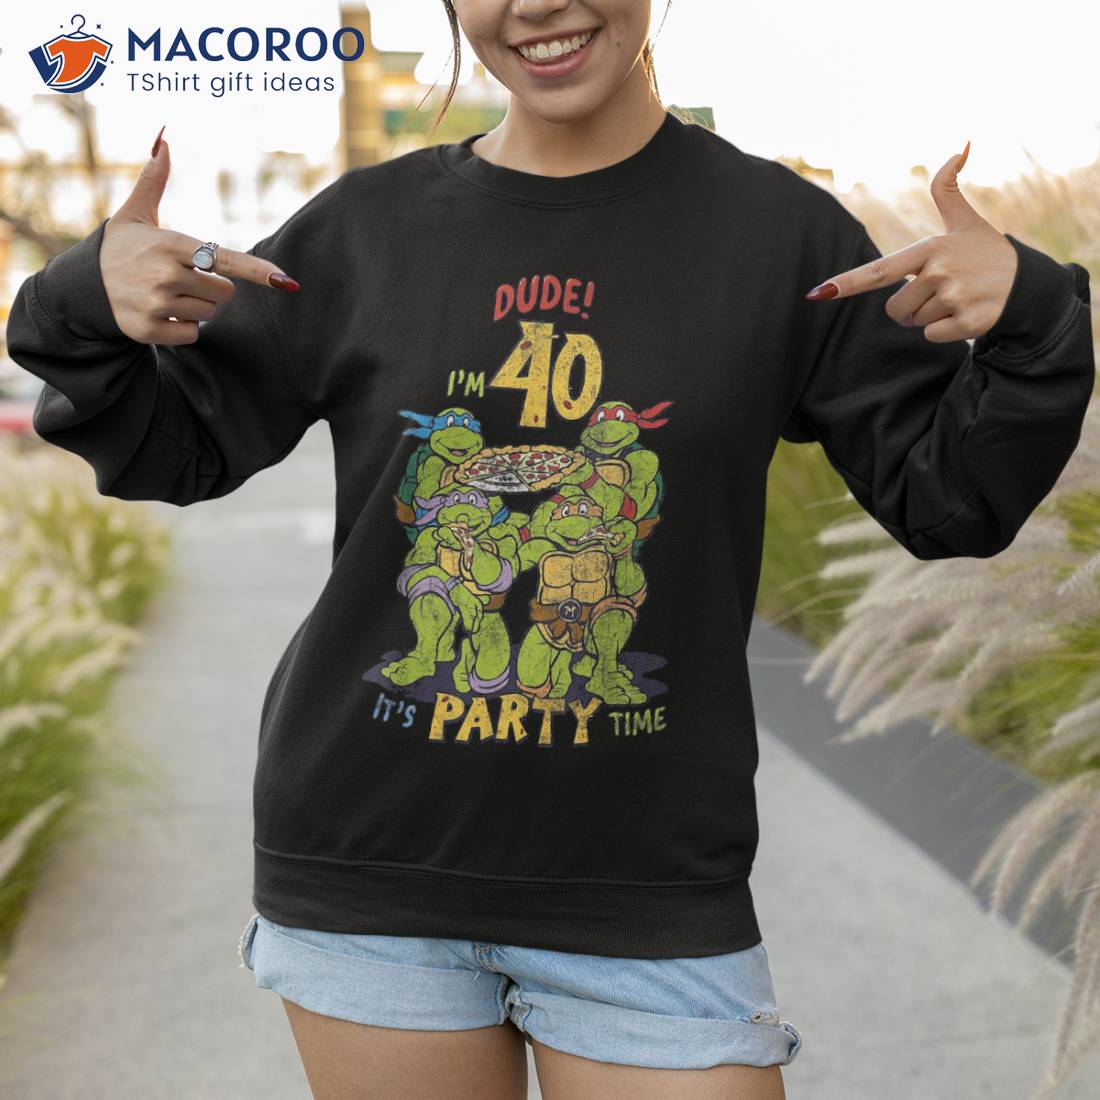 Teenage Mutant Ninja Turtles Birthday Boy Iron On T Shirt Fabric Transfers